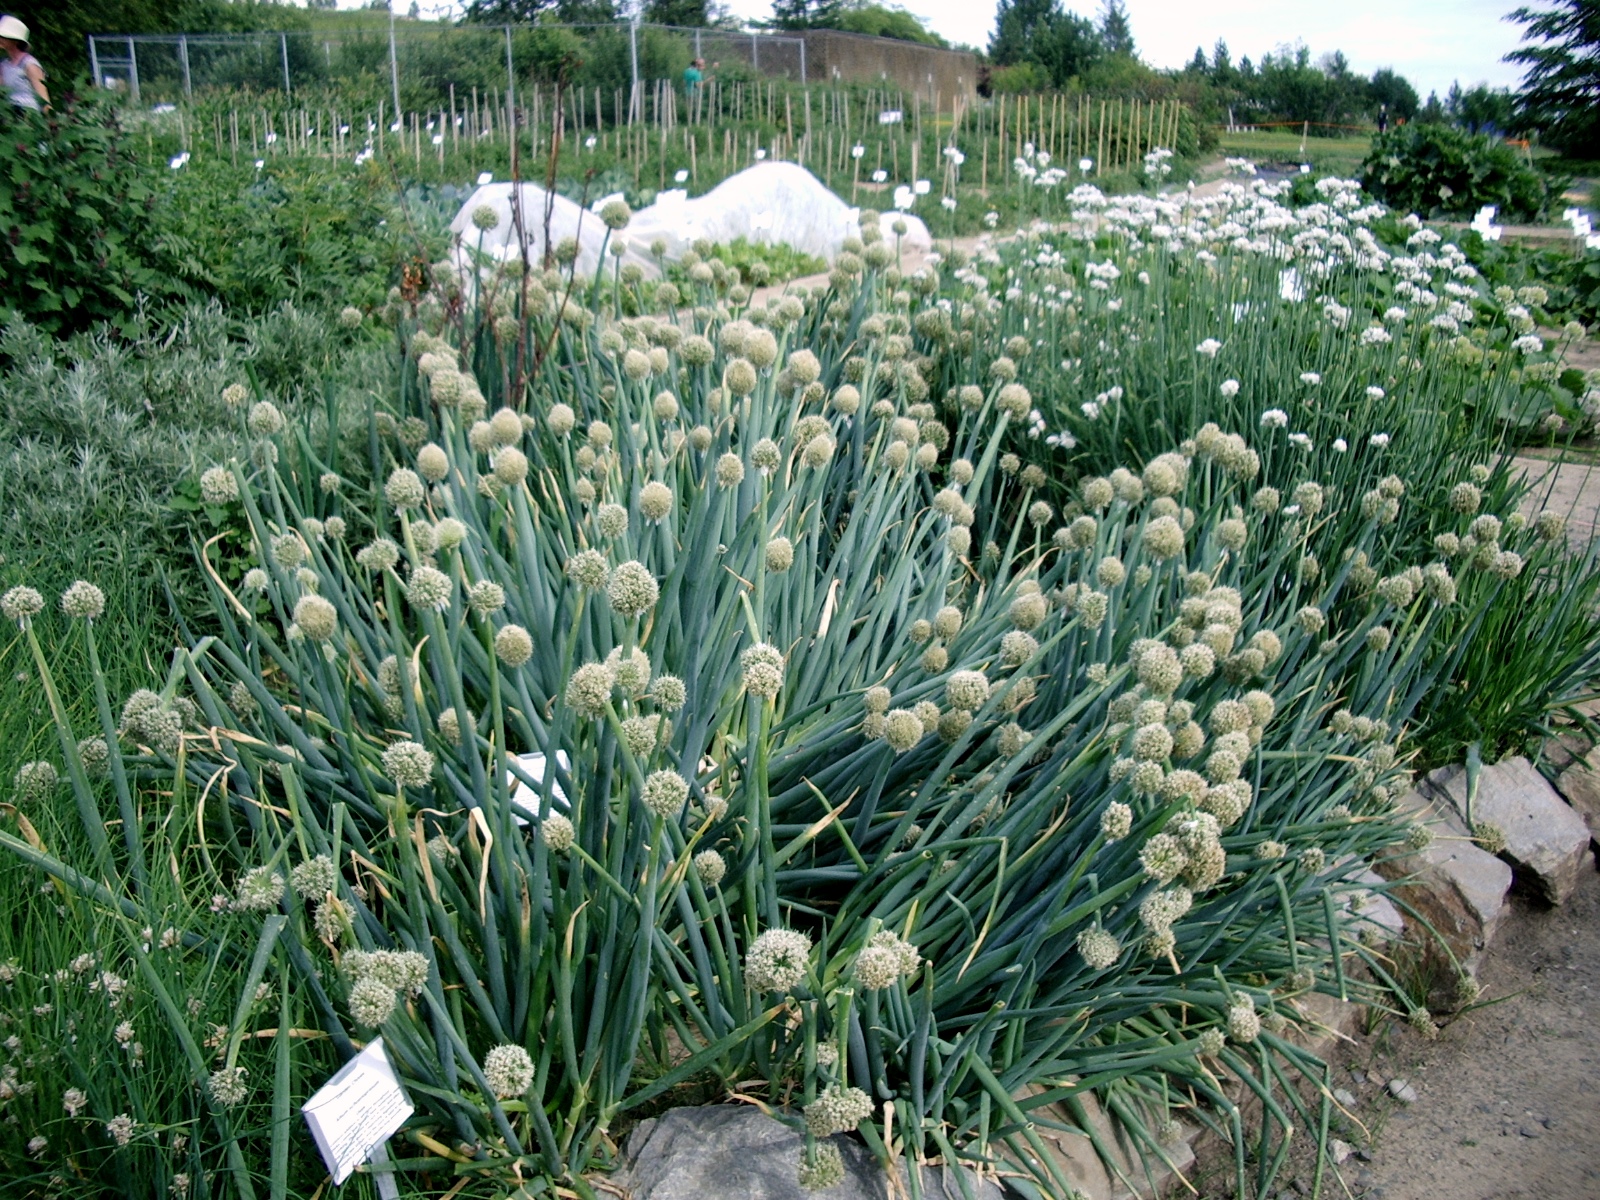 Siberian Onions growing in the Georgeson Botanical Garden in Fairbanks, Alaska.